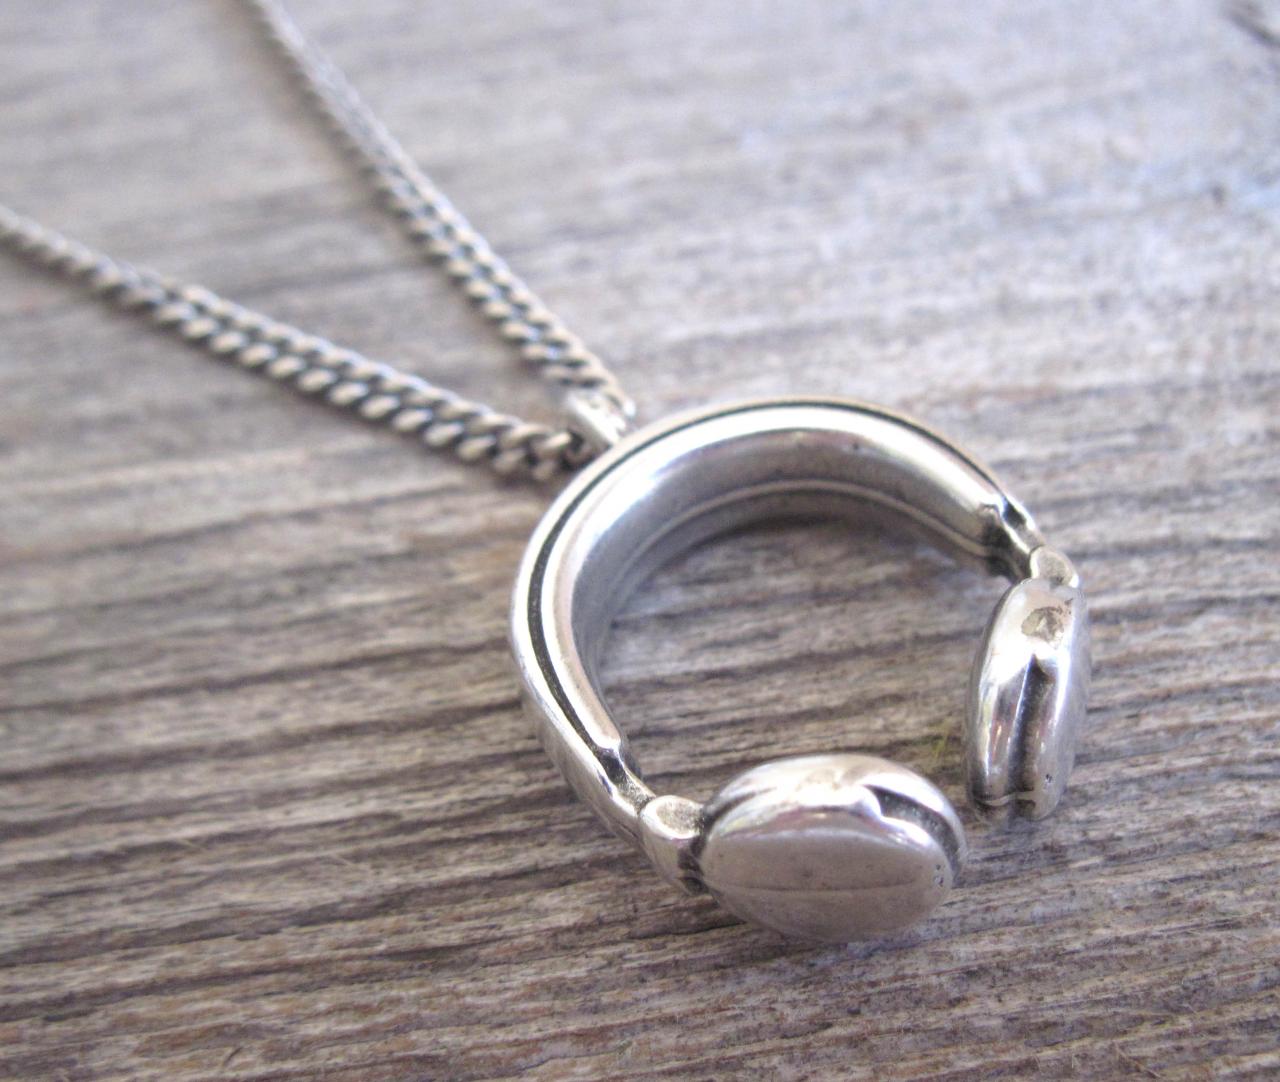 Men's Necklace - Men's Earphone Necklace - Men's Silver Necklace - Mens Jewelry - Necklaces For Men - Jewelry For Men